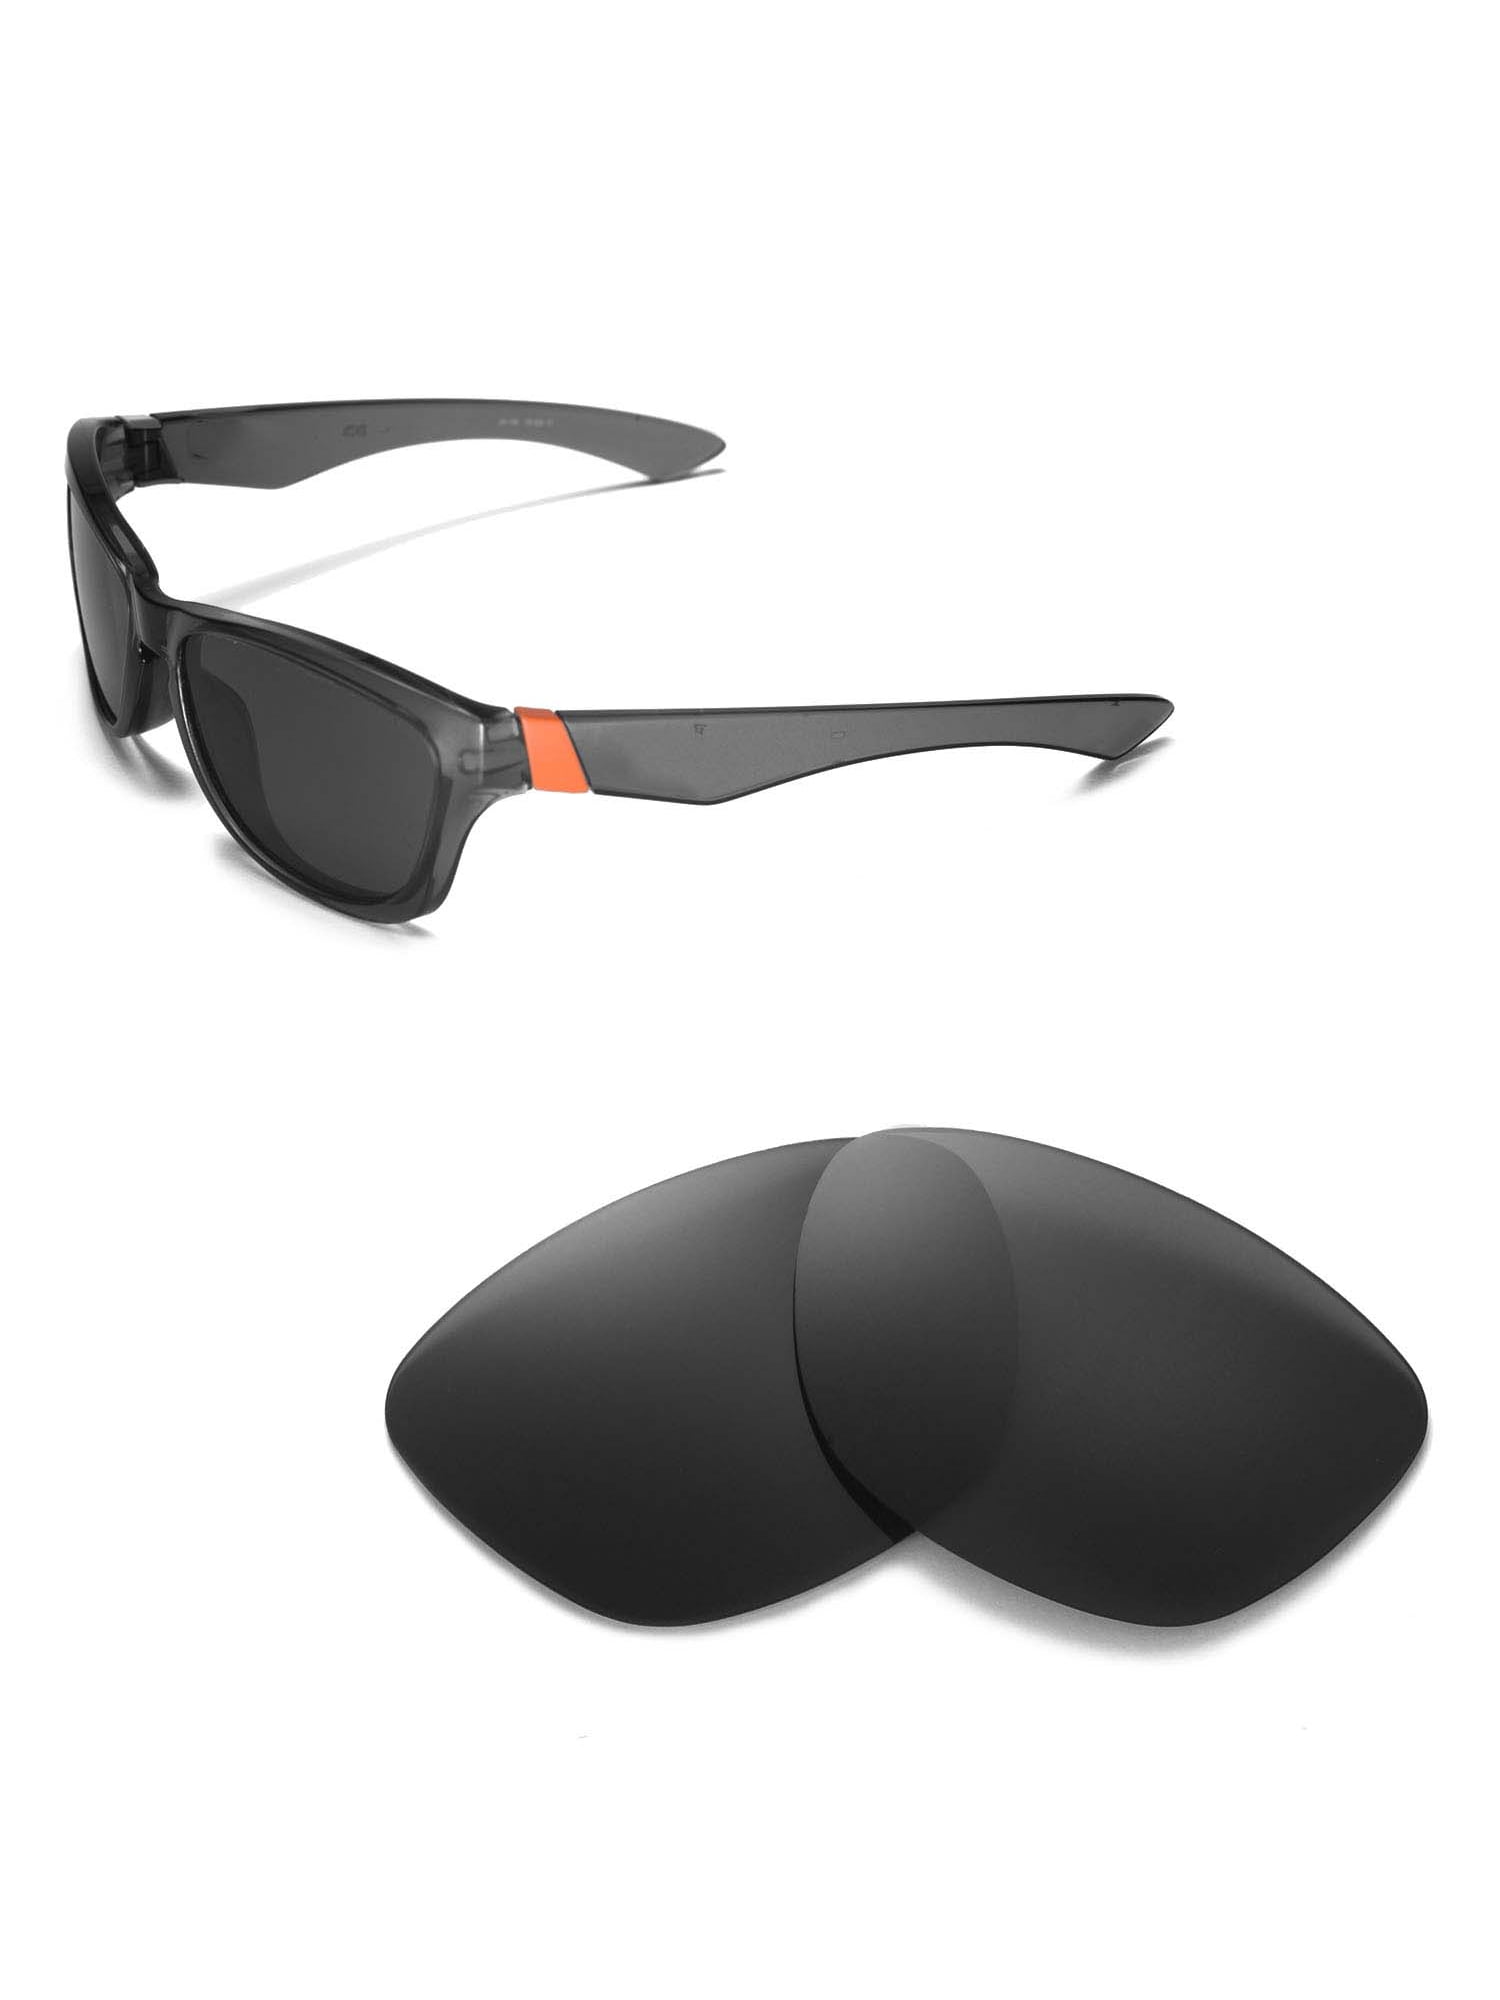 Walleva Black Polarized Lenses for Oakley Sunglasses - Walmart.com